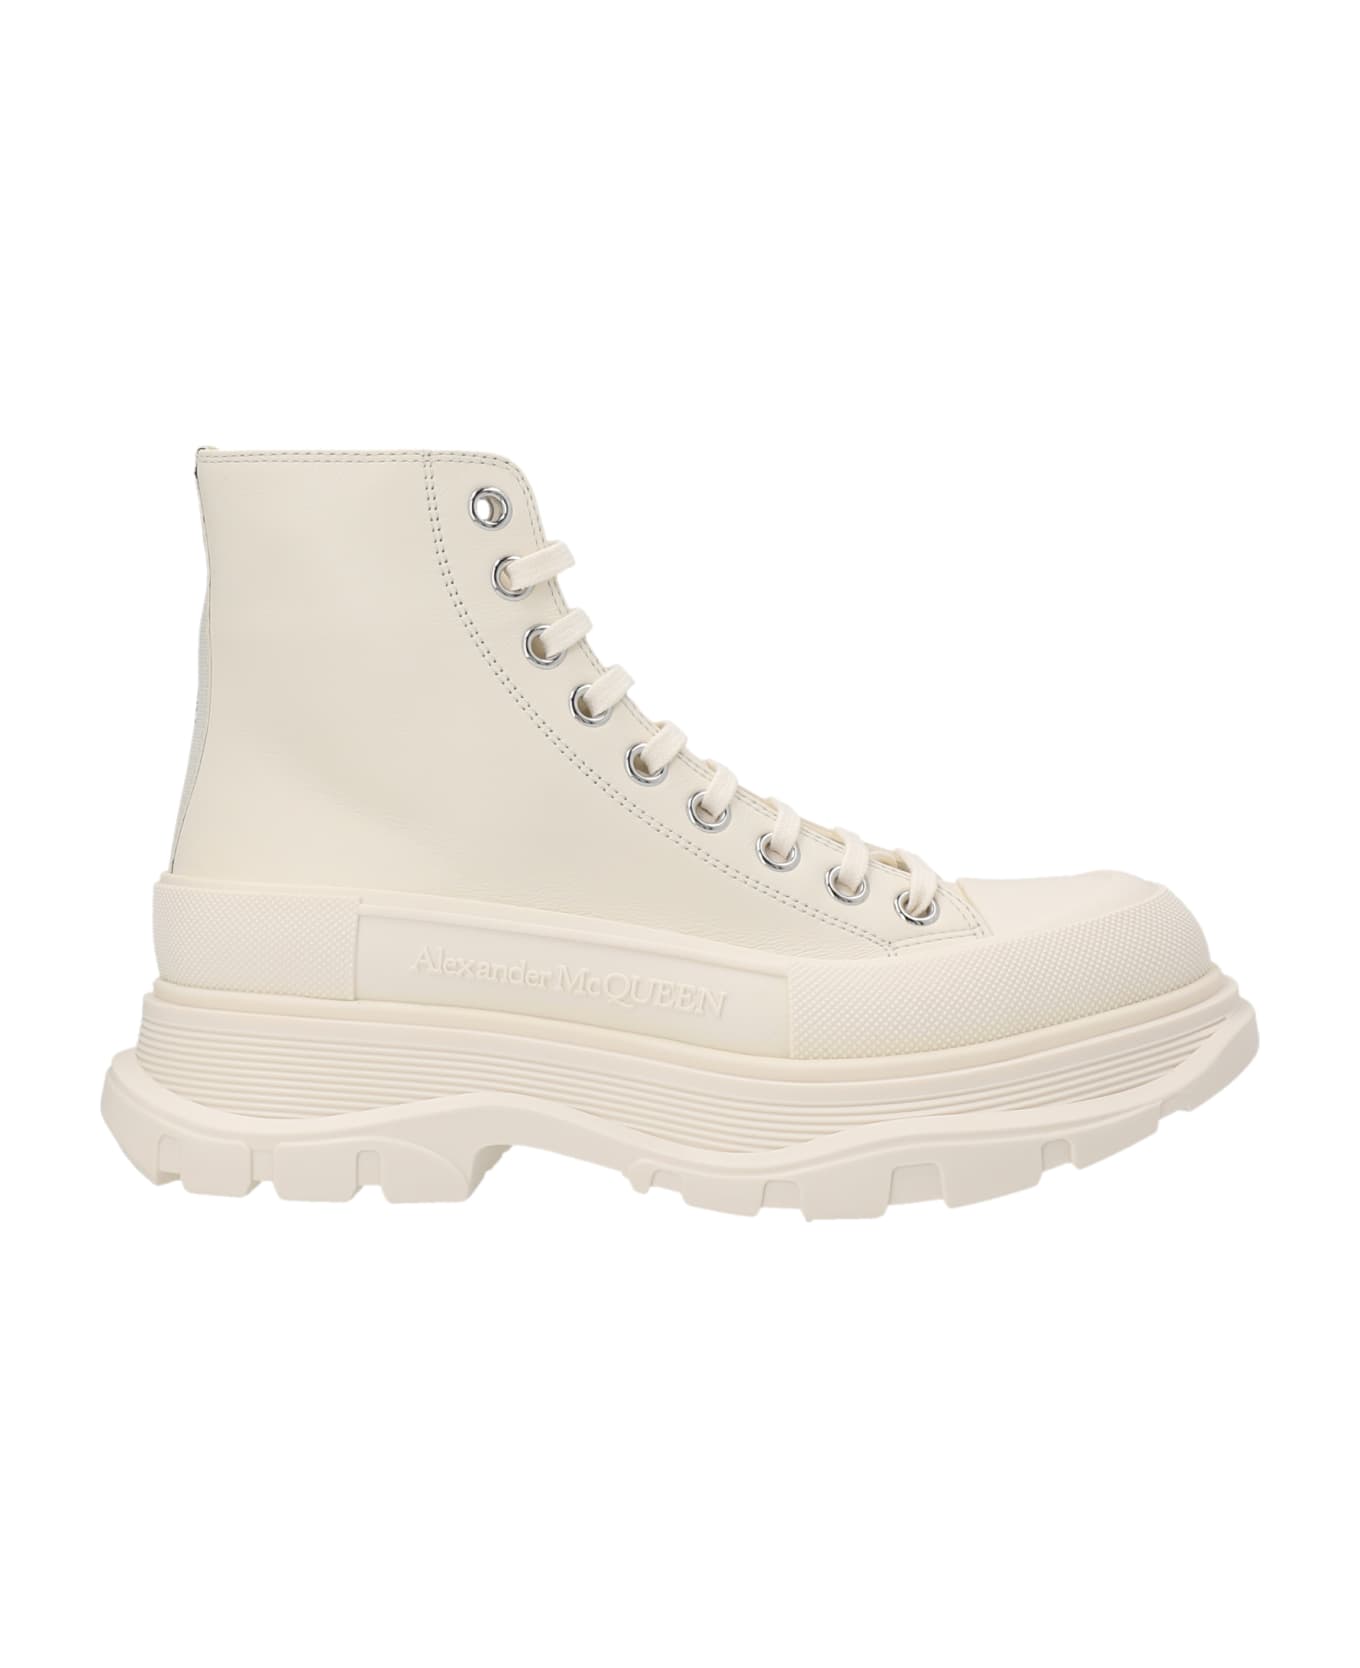 Alexander McQueen High Sneakers - White